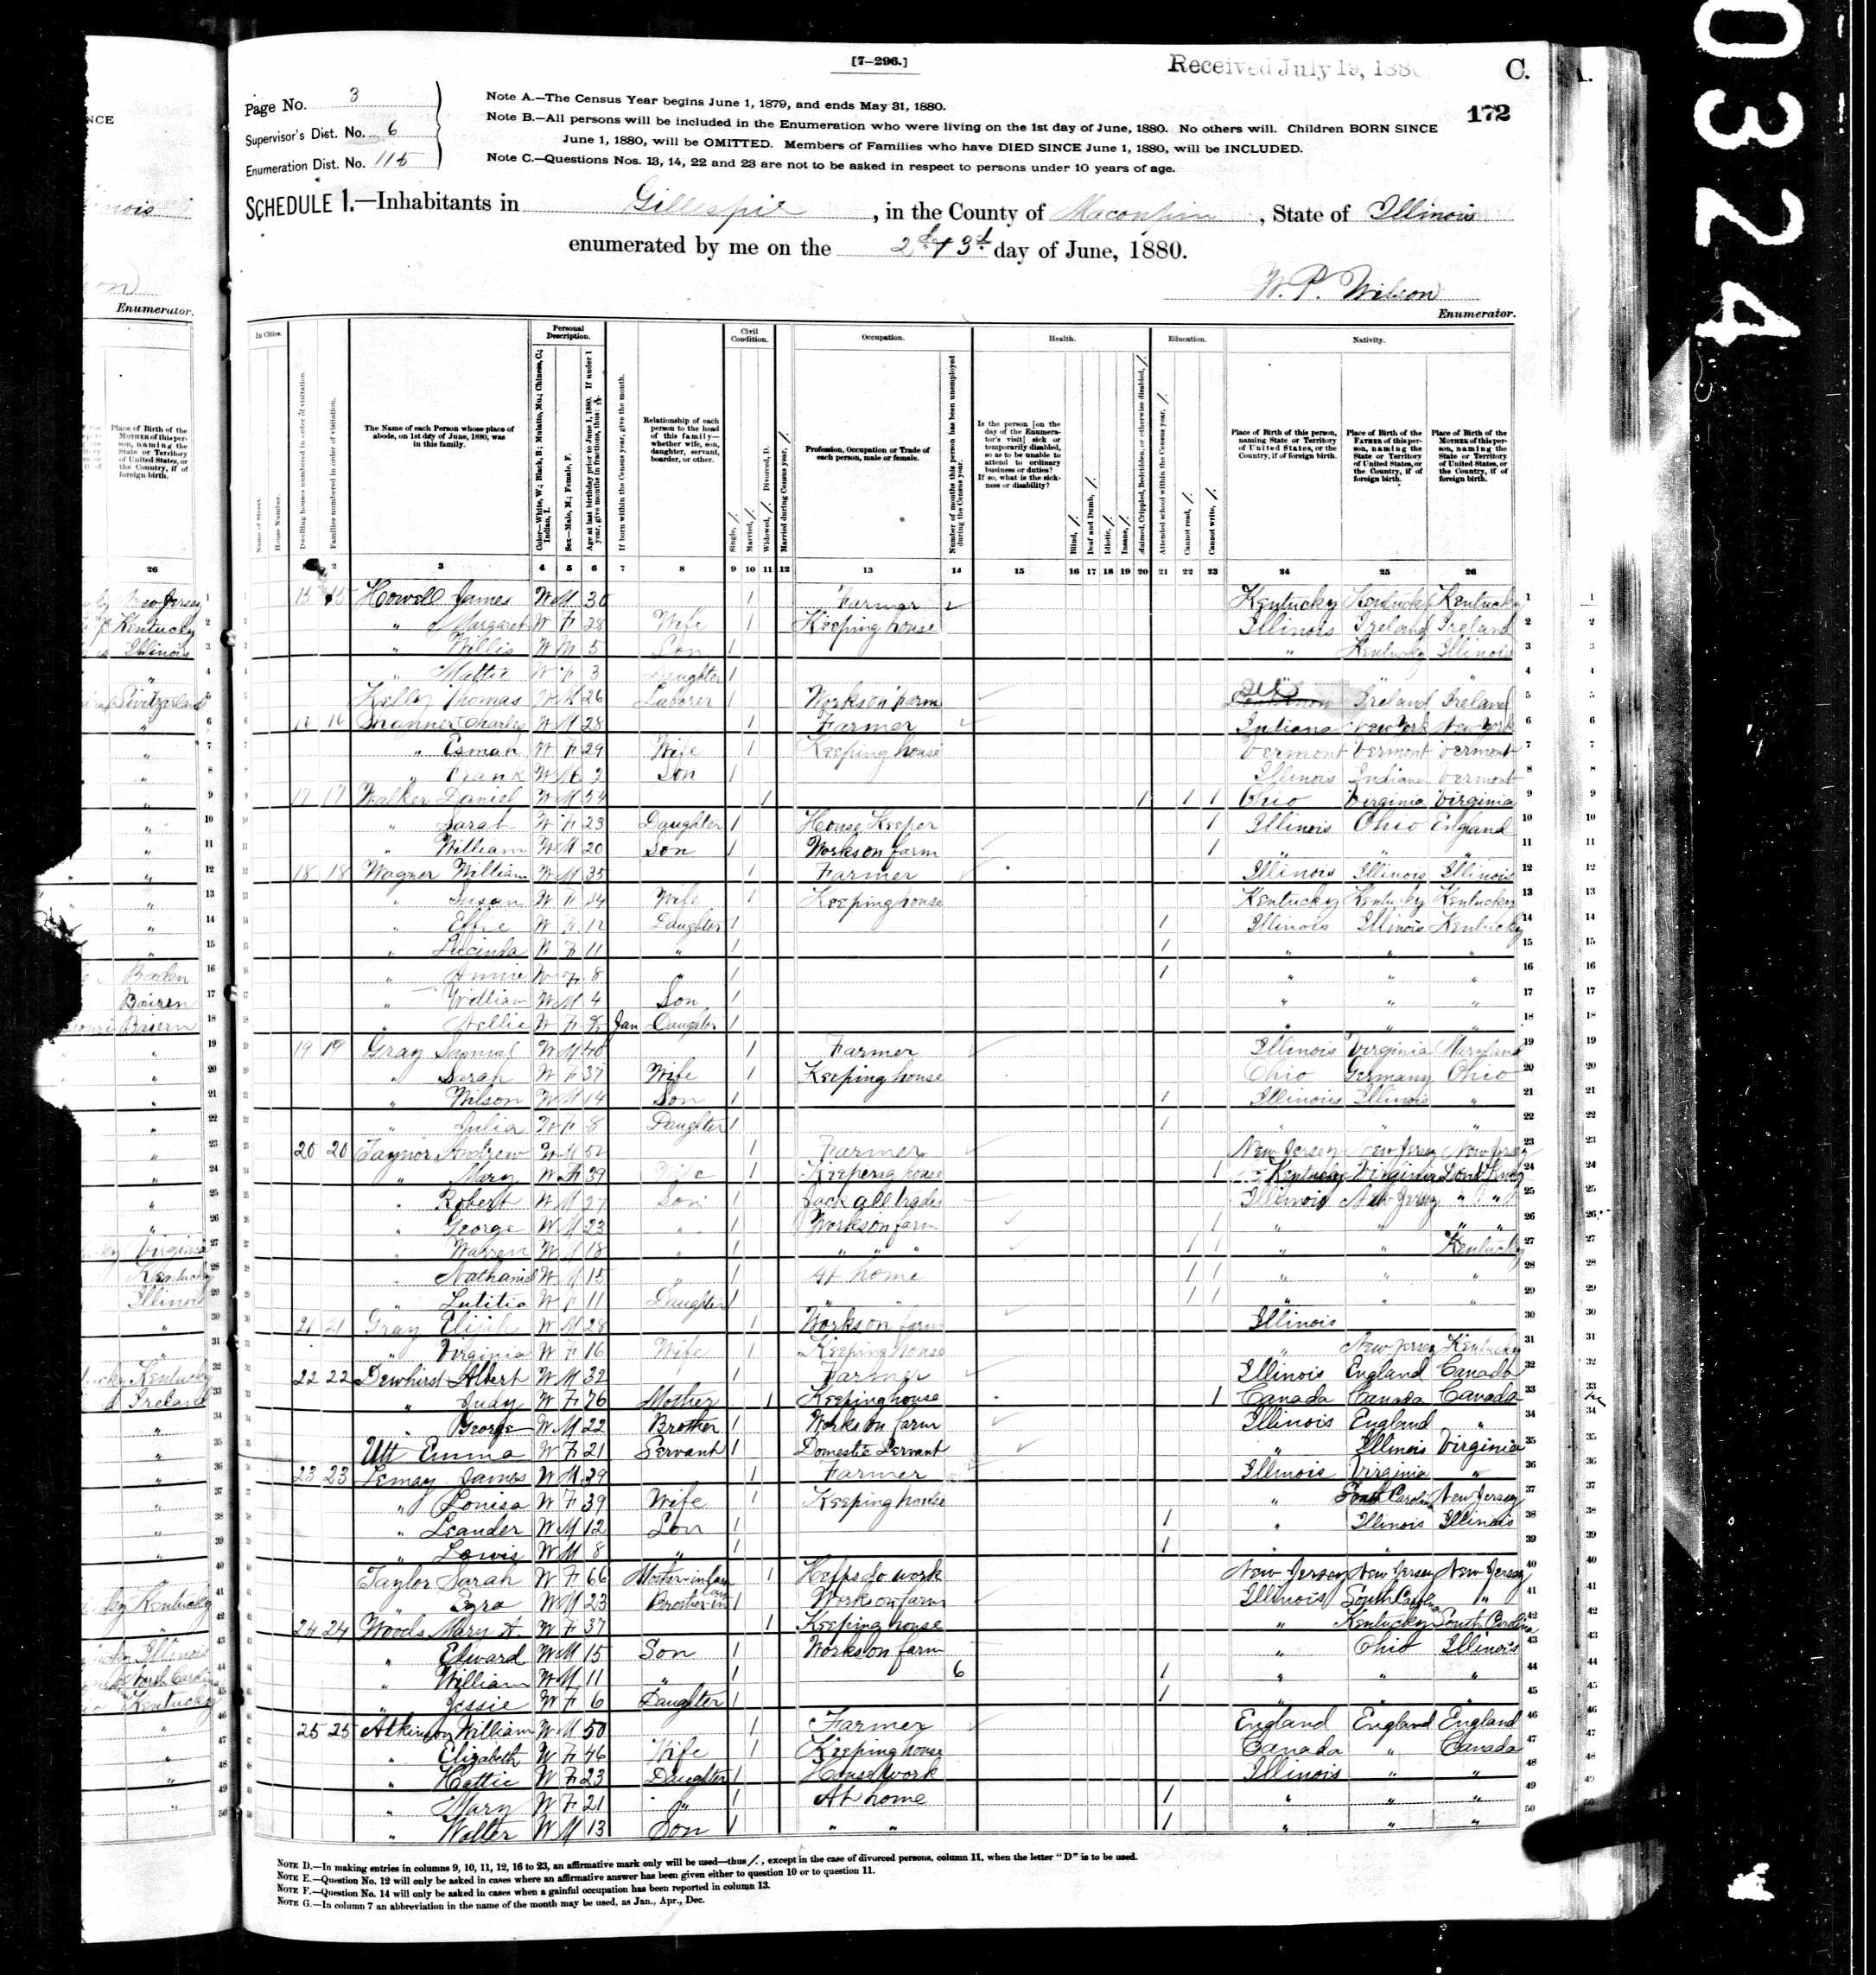 Daniel Walker, 1880 Macoupin County, Illinois, census